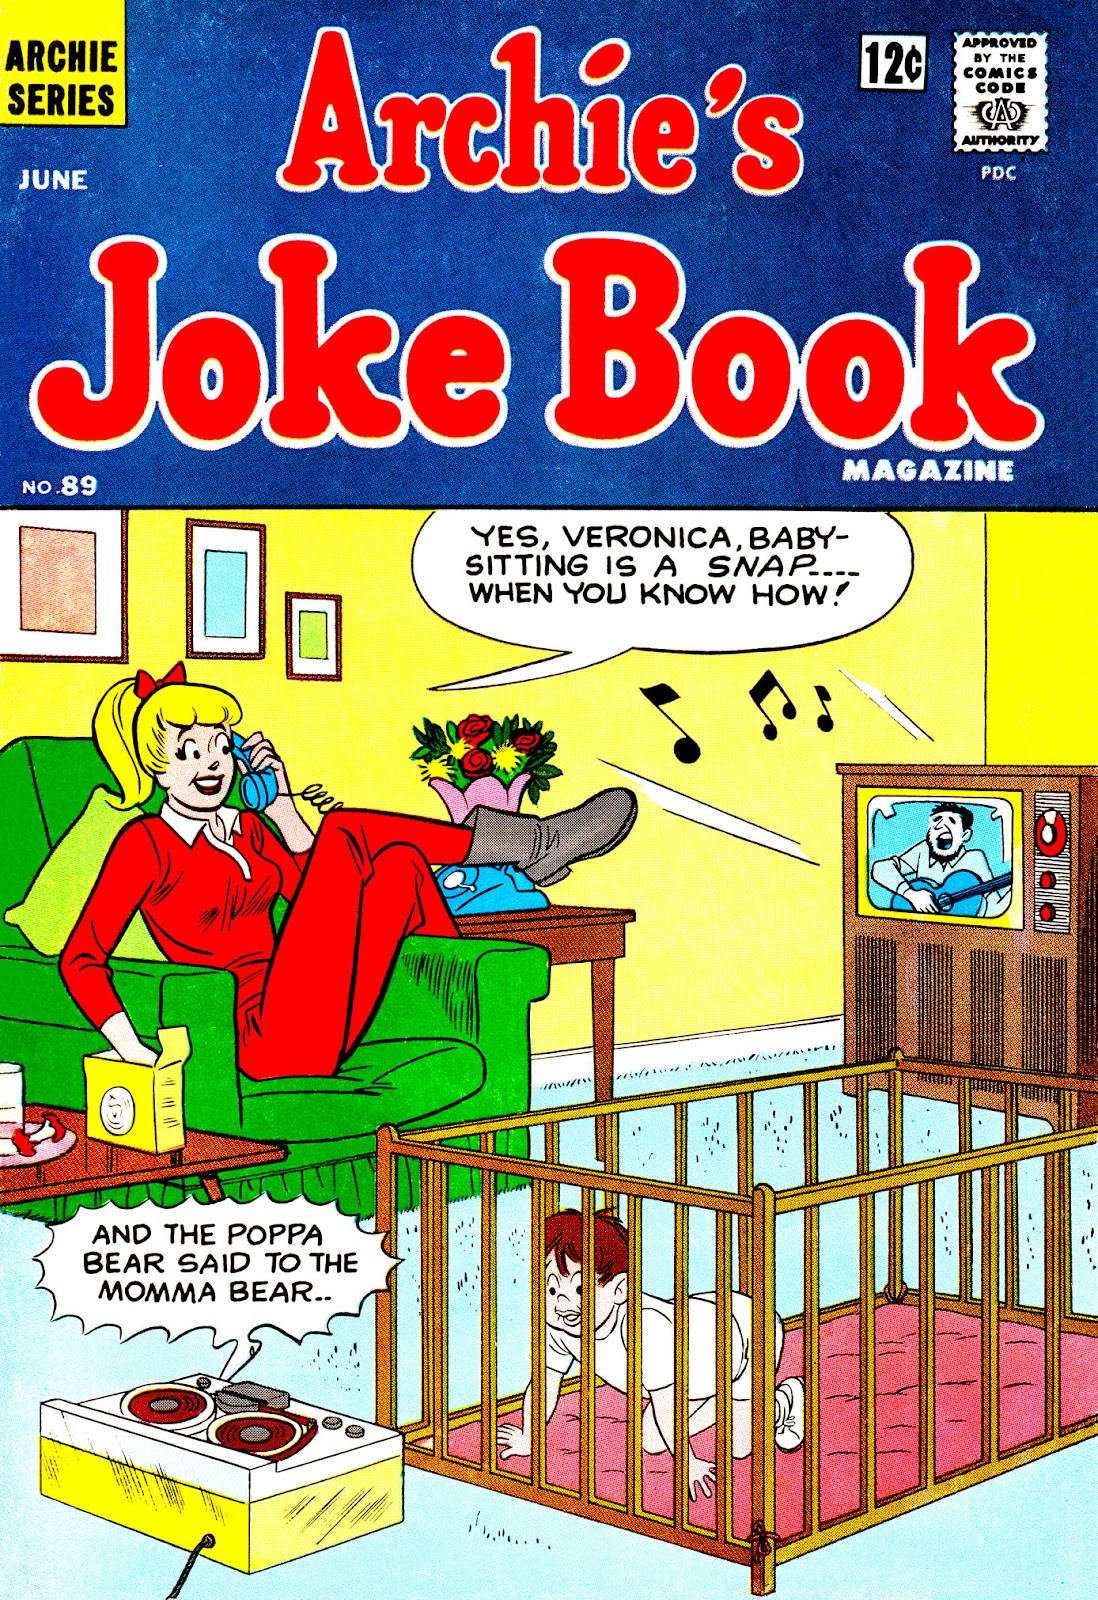 Archie's Joke Book Magazine issue 89 - Page 1